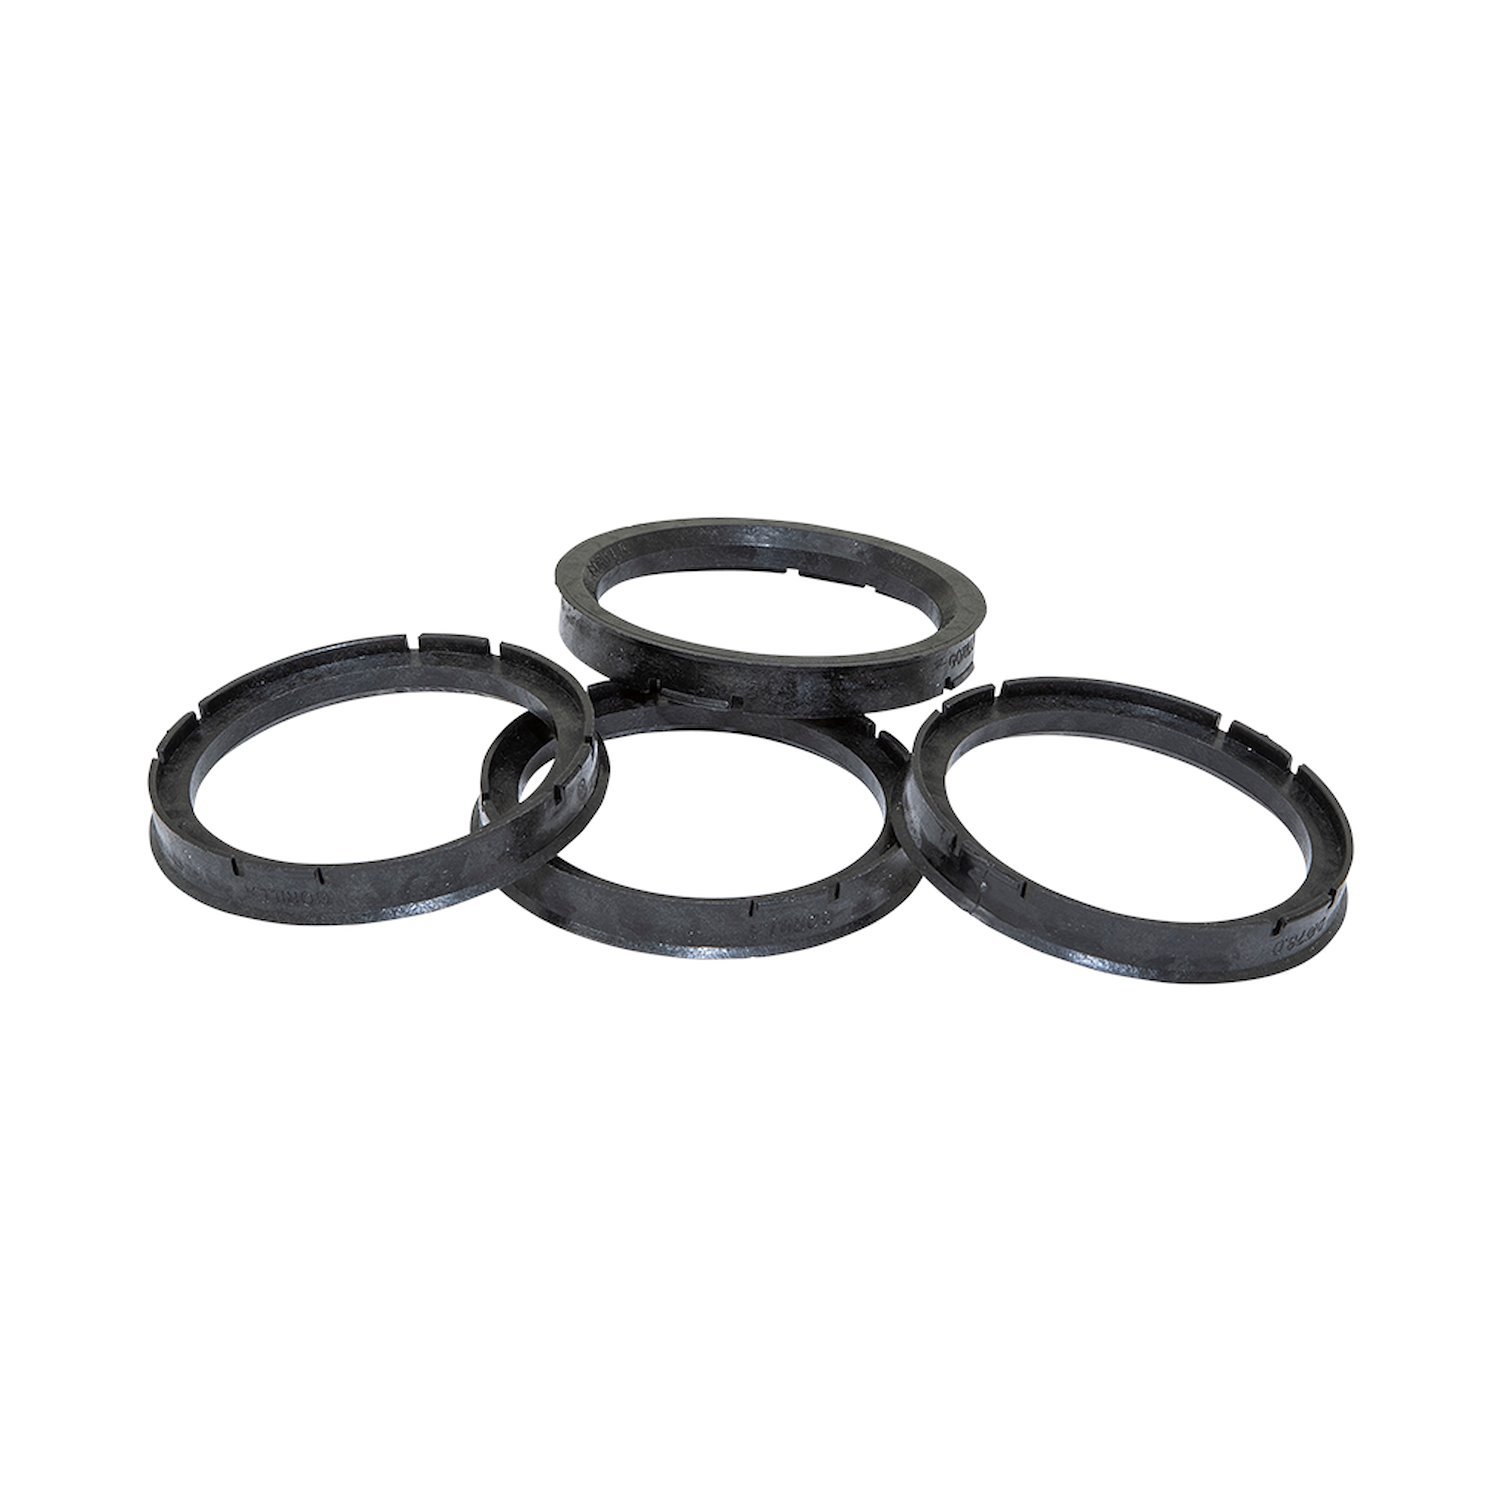 76-5960 Hub Ring Set, 76 mm O.D., 59.60 mm I.D., Set of 4